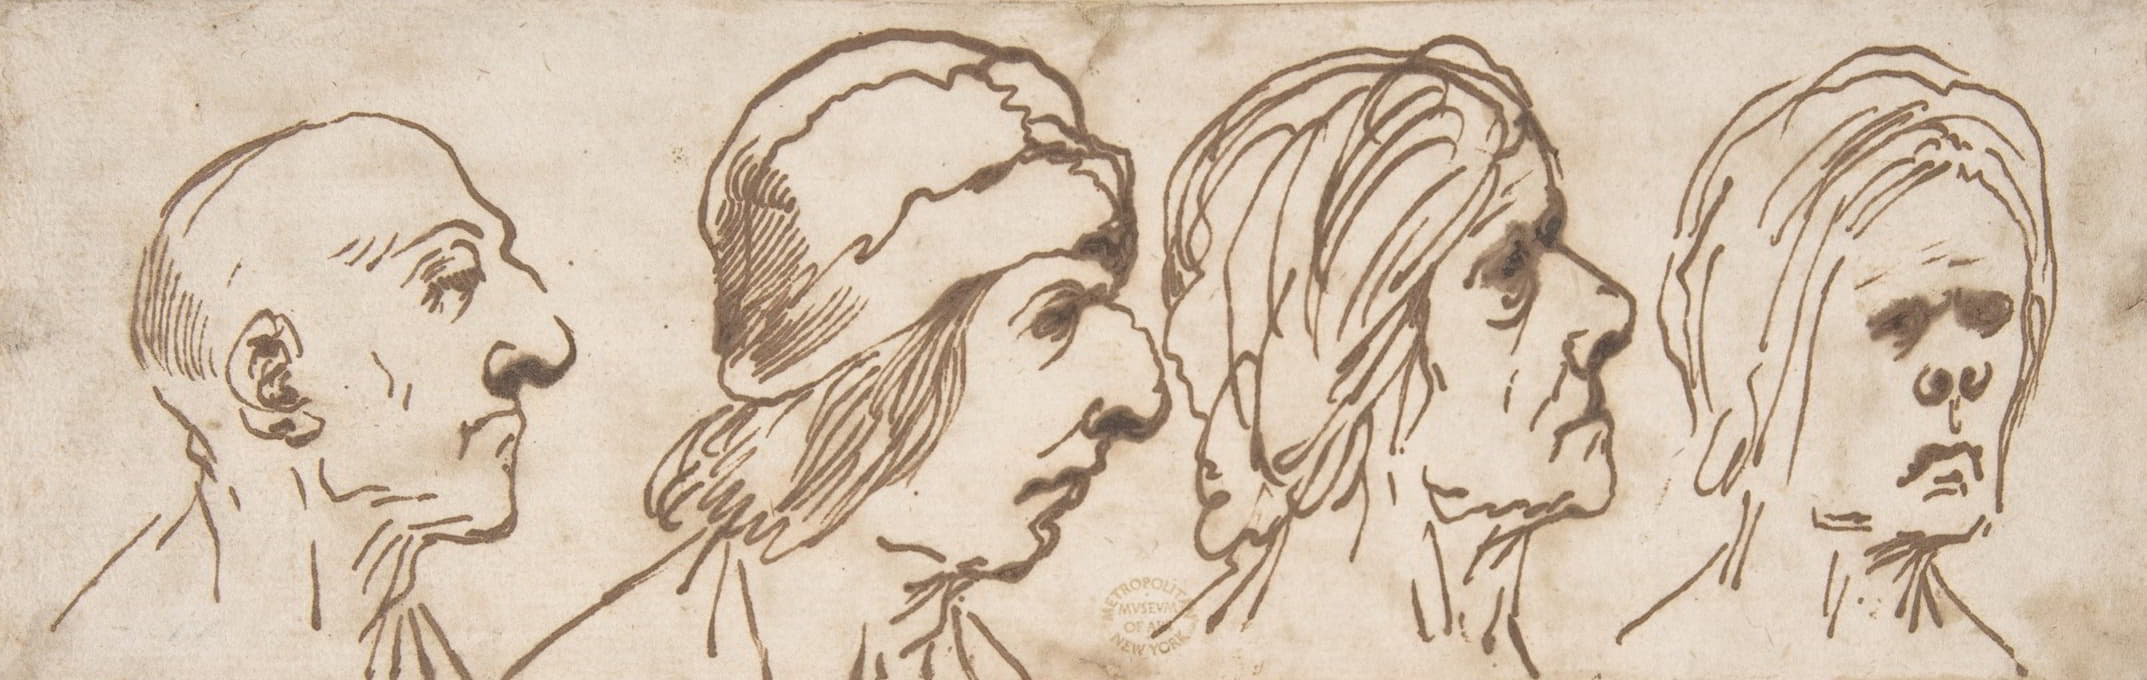 Pier Francesco Mola - Four Caricatured Heads